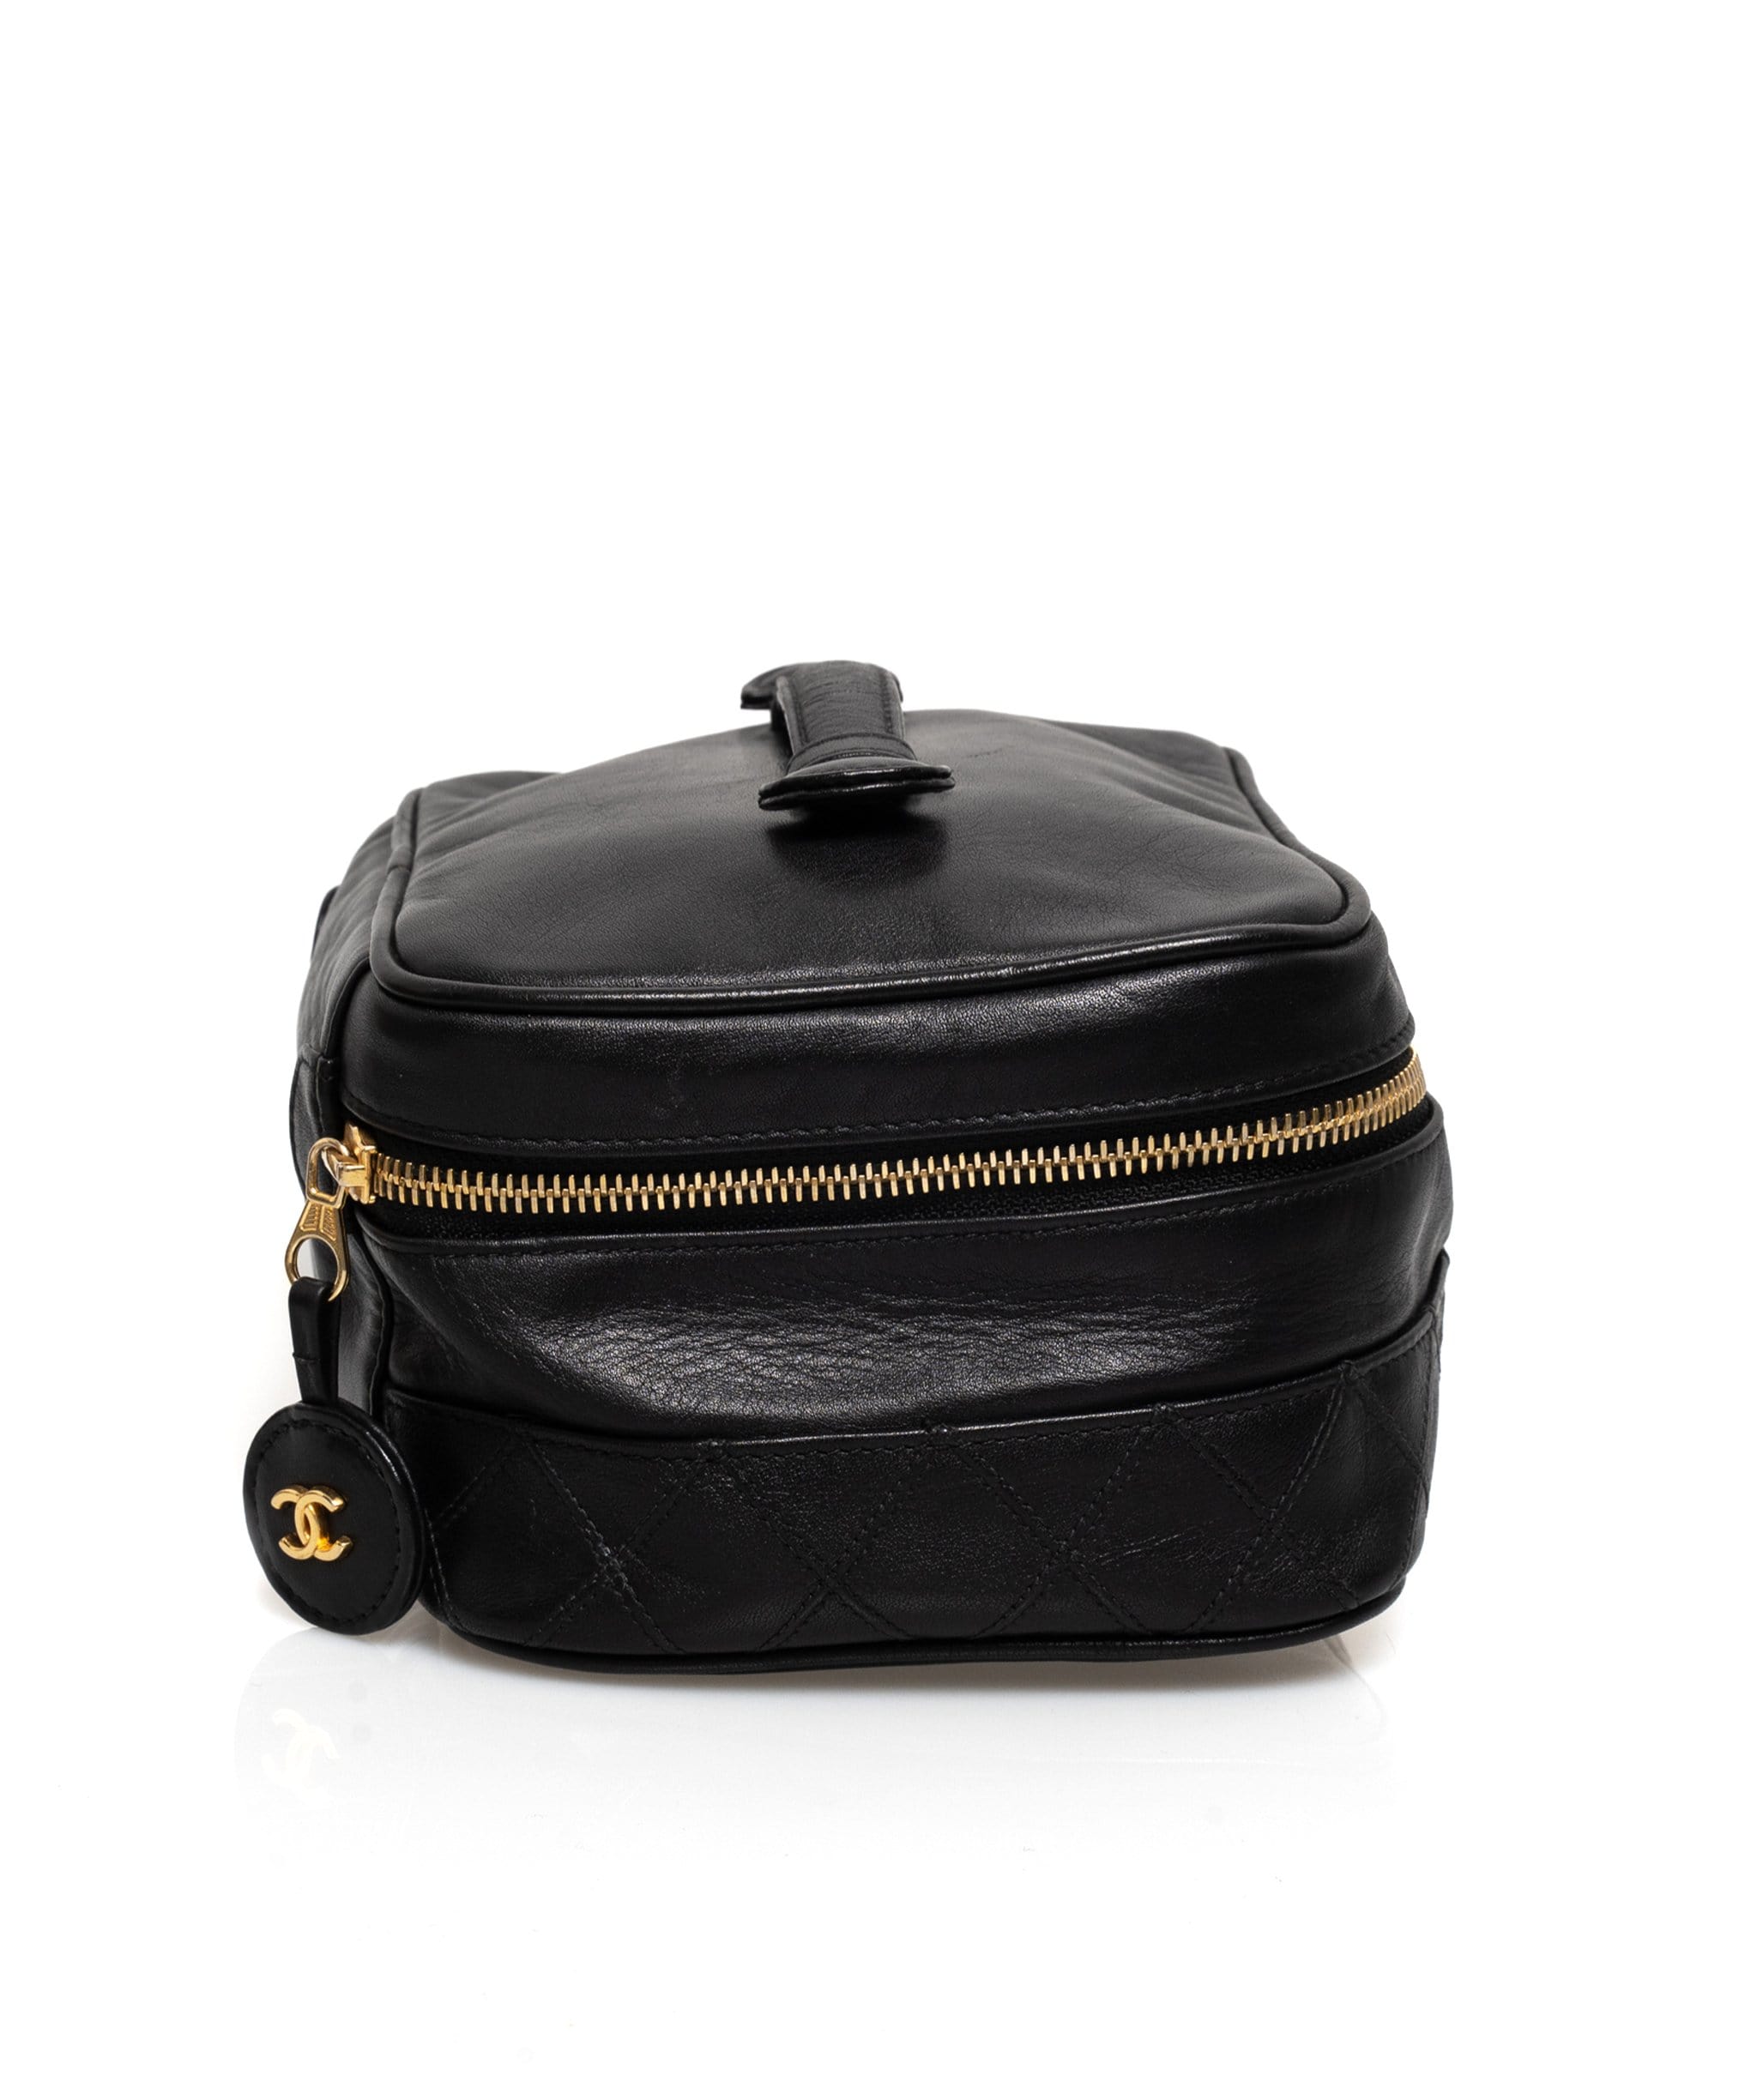 Chanel Chanel Vanity Case Bag - AWL1303